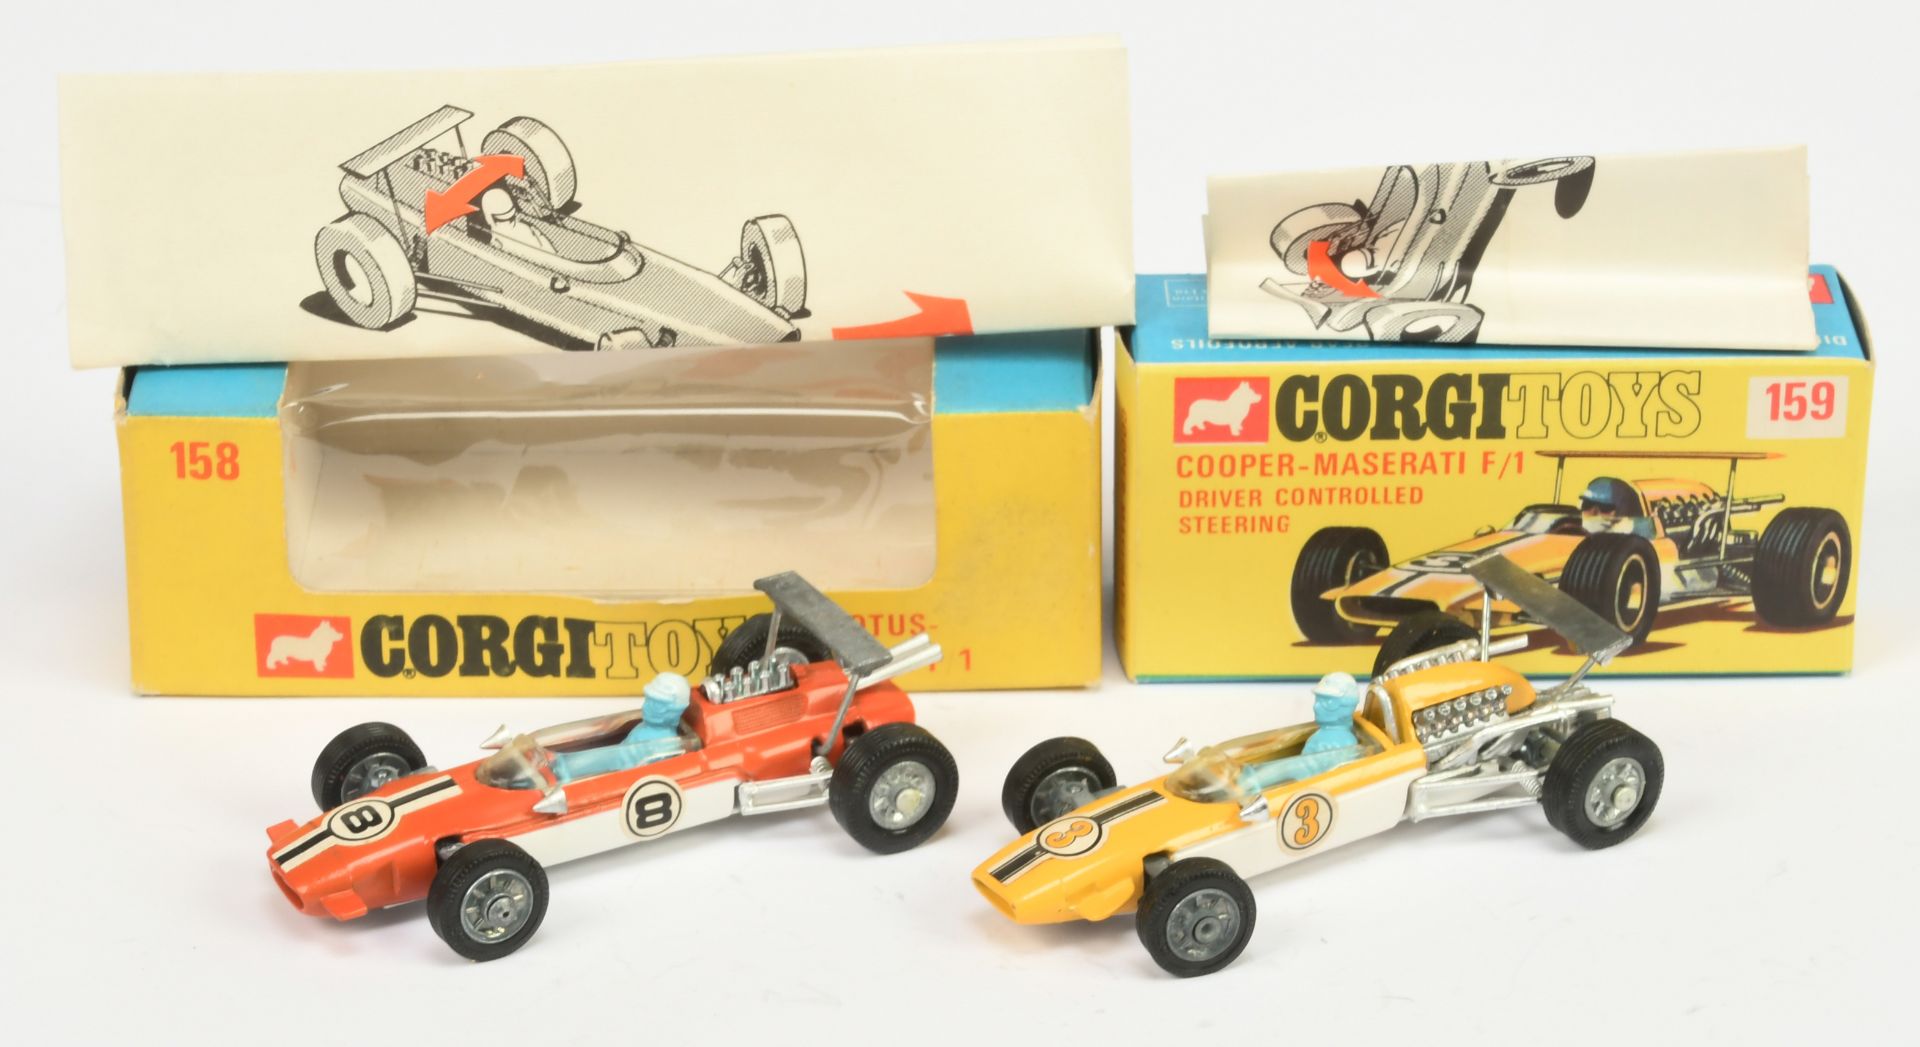 Corgi Toys Formula 1 Racing Cars Group A Pair - (1) 158 Lotus-Climax - Orange and white, cast hub...